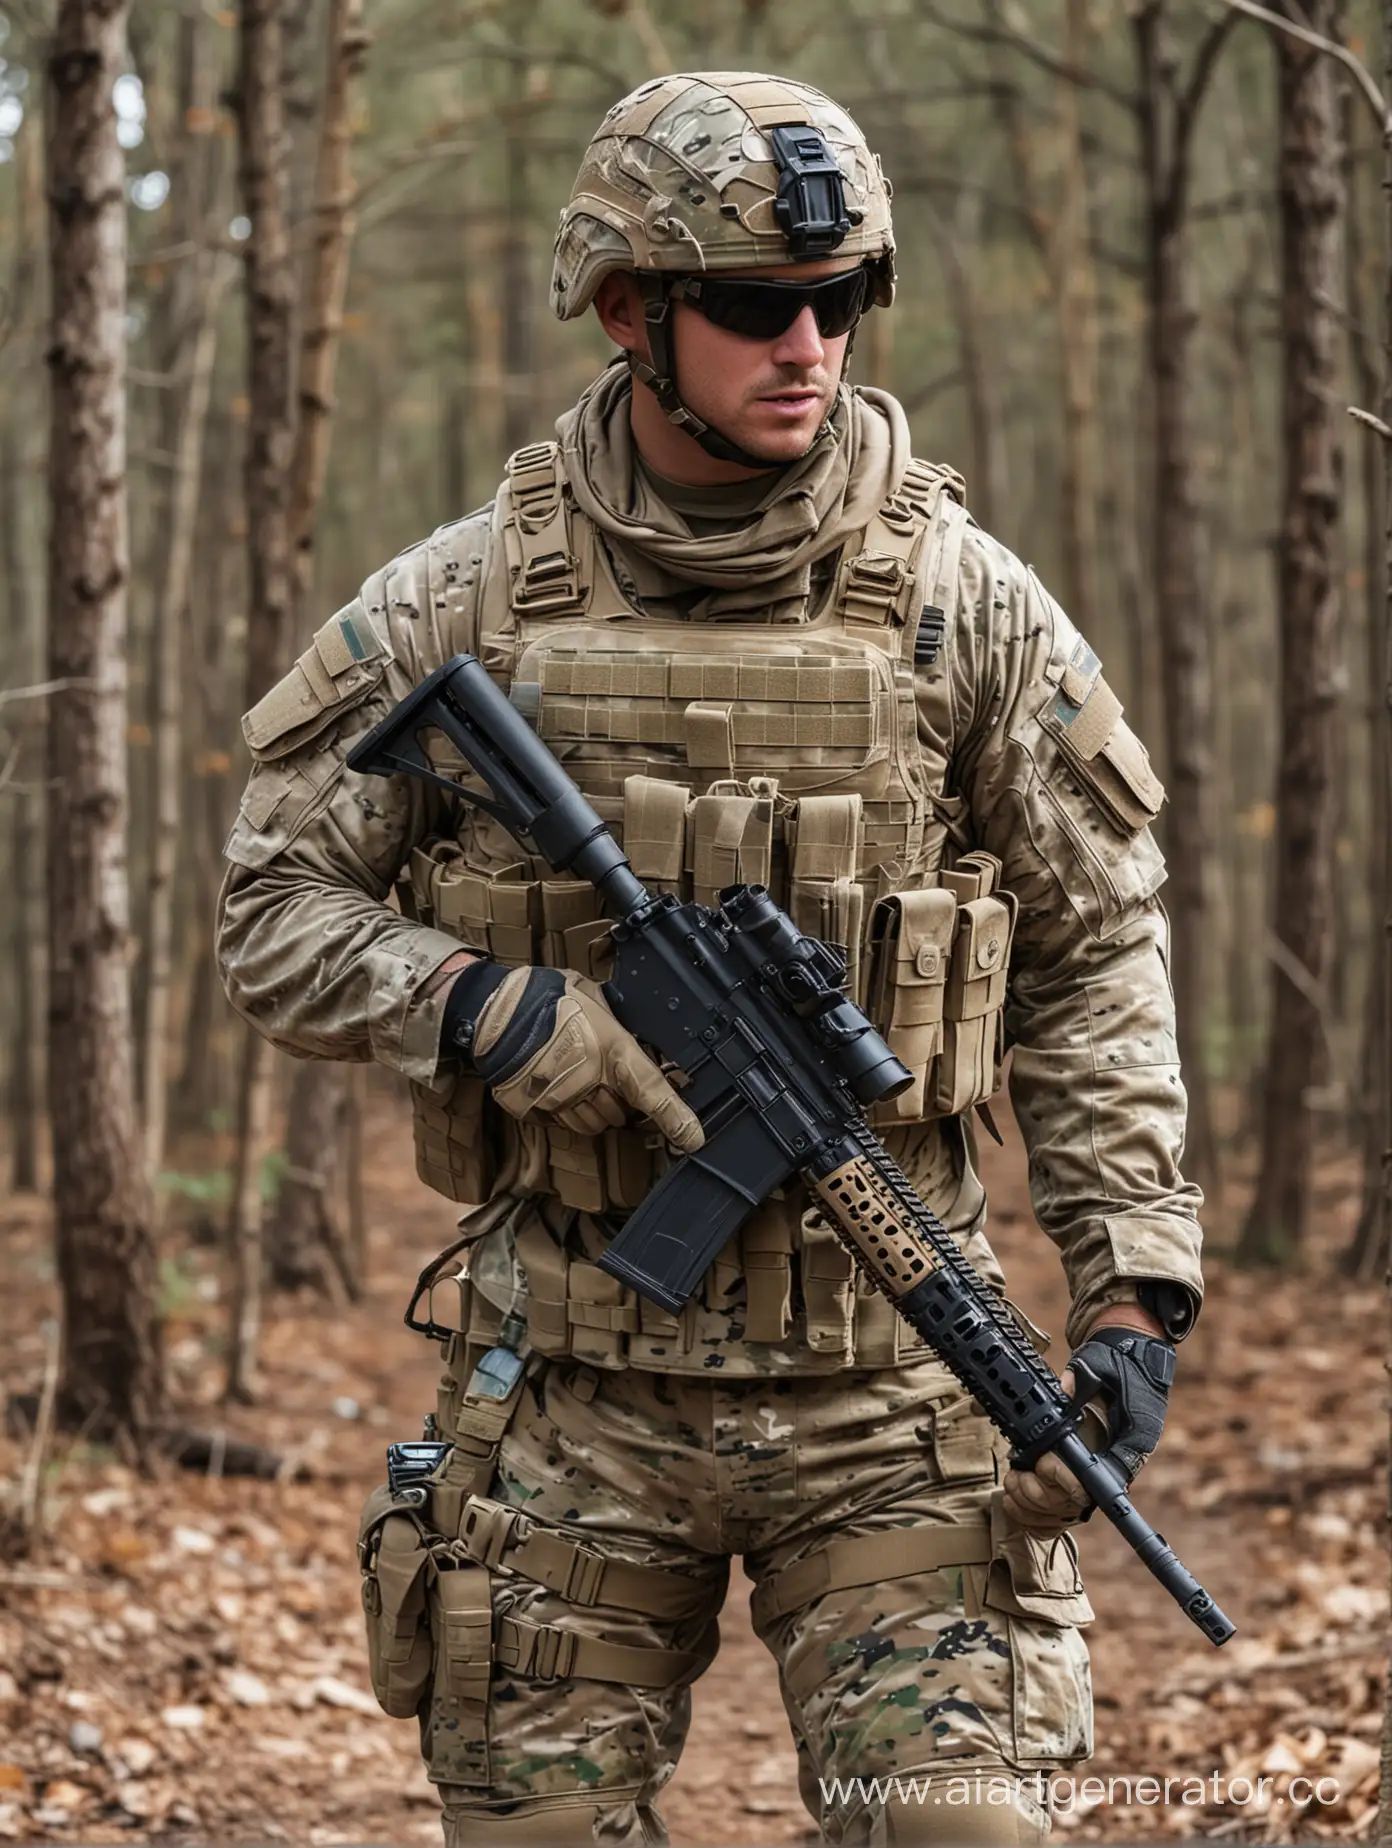 Elite-Special-Forces-Soldier-in-Multicam-Uniform